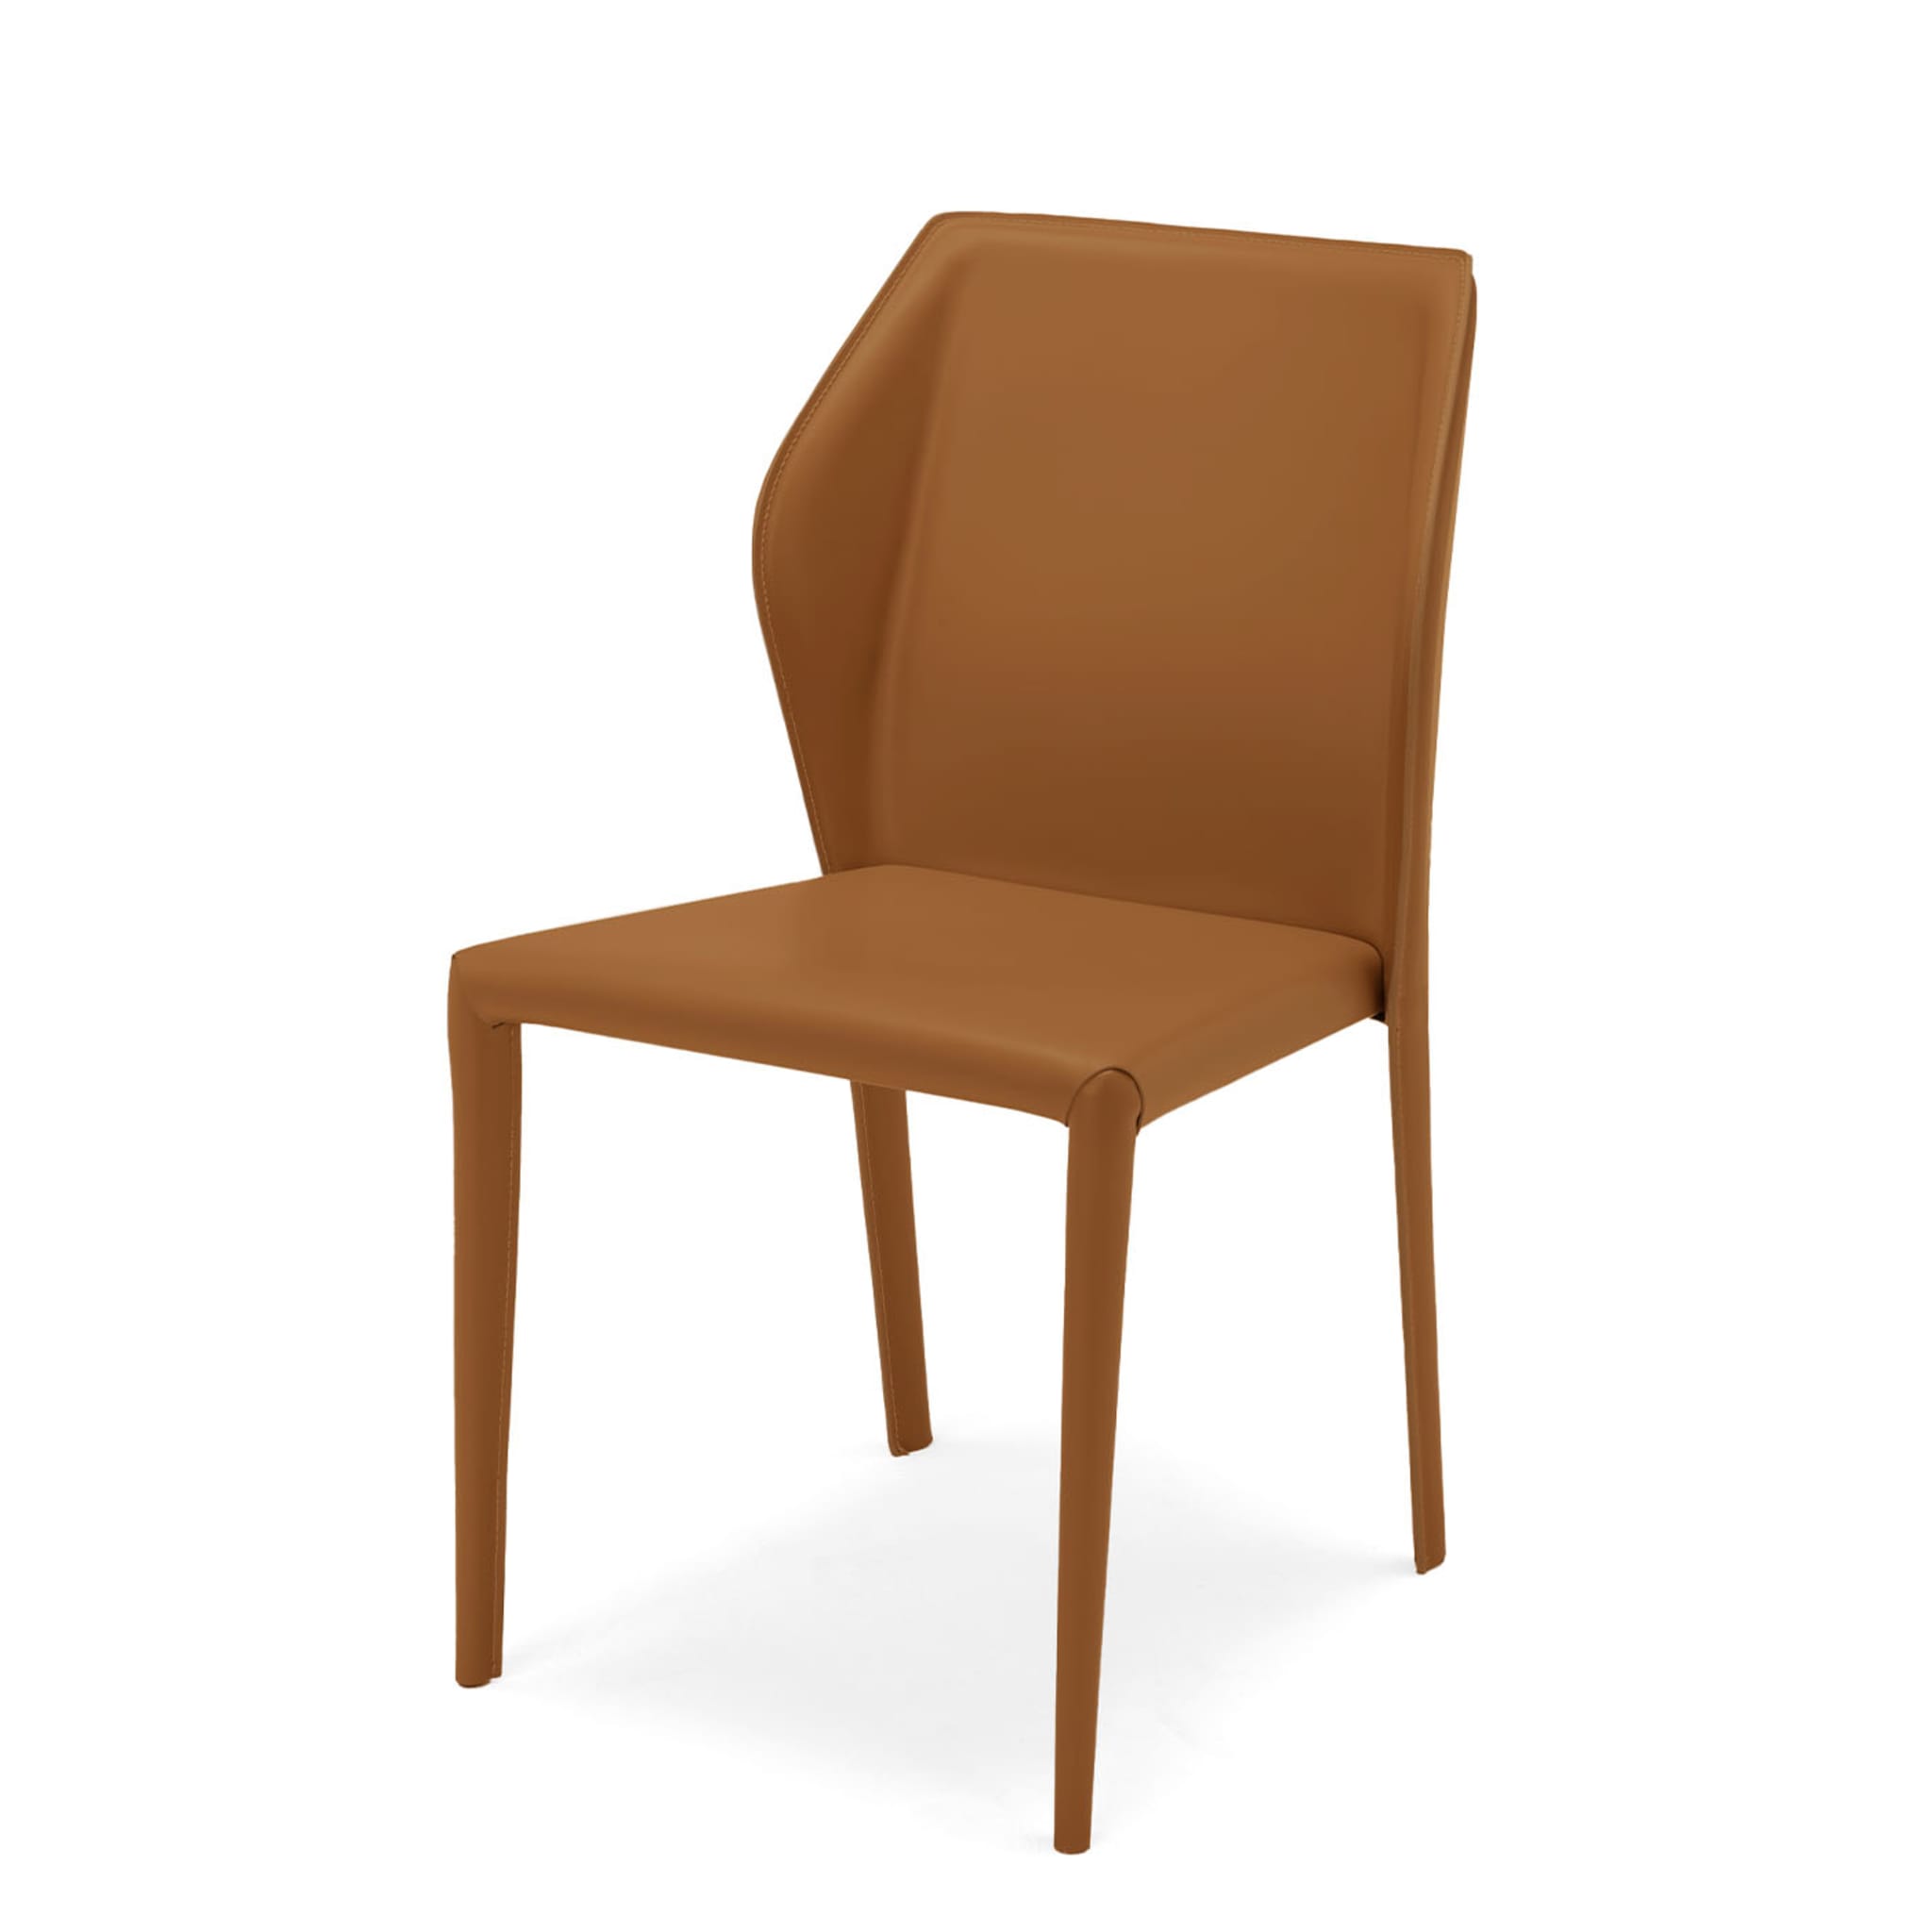 Set of 2 Fold Chair #1 - Alternative view 1